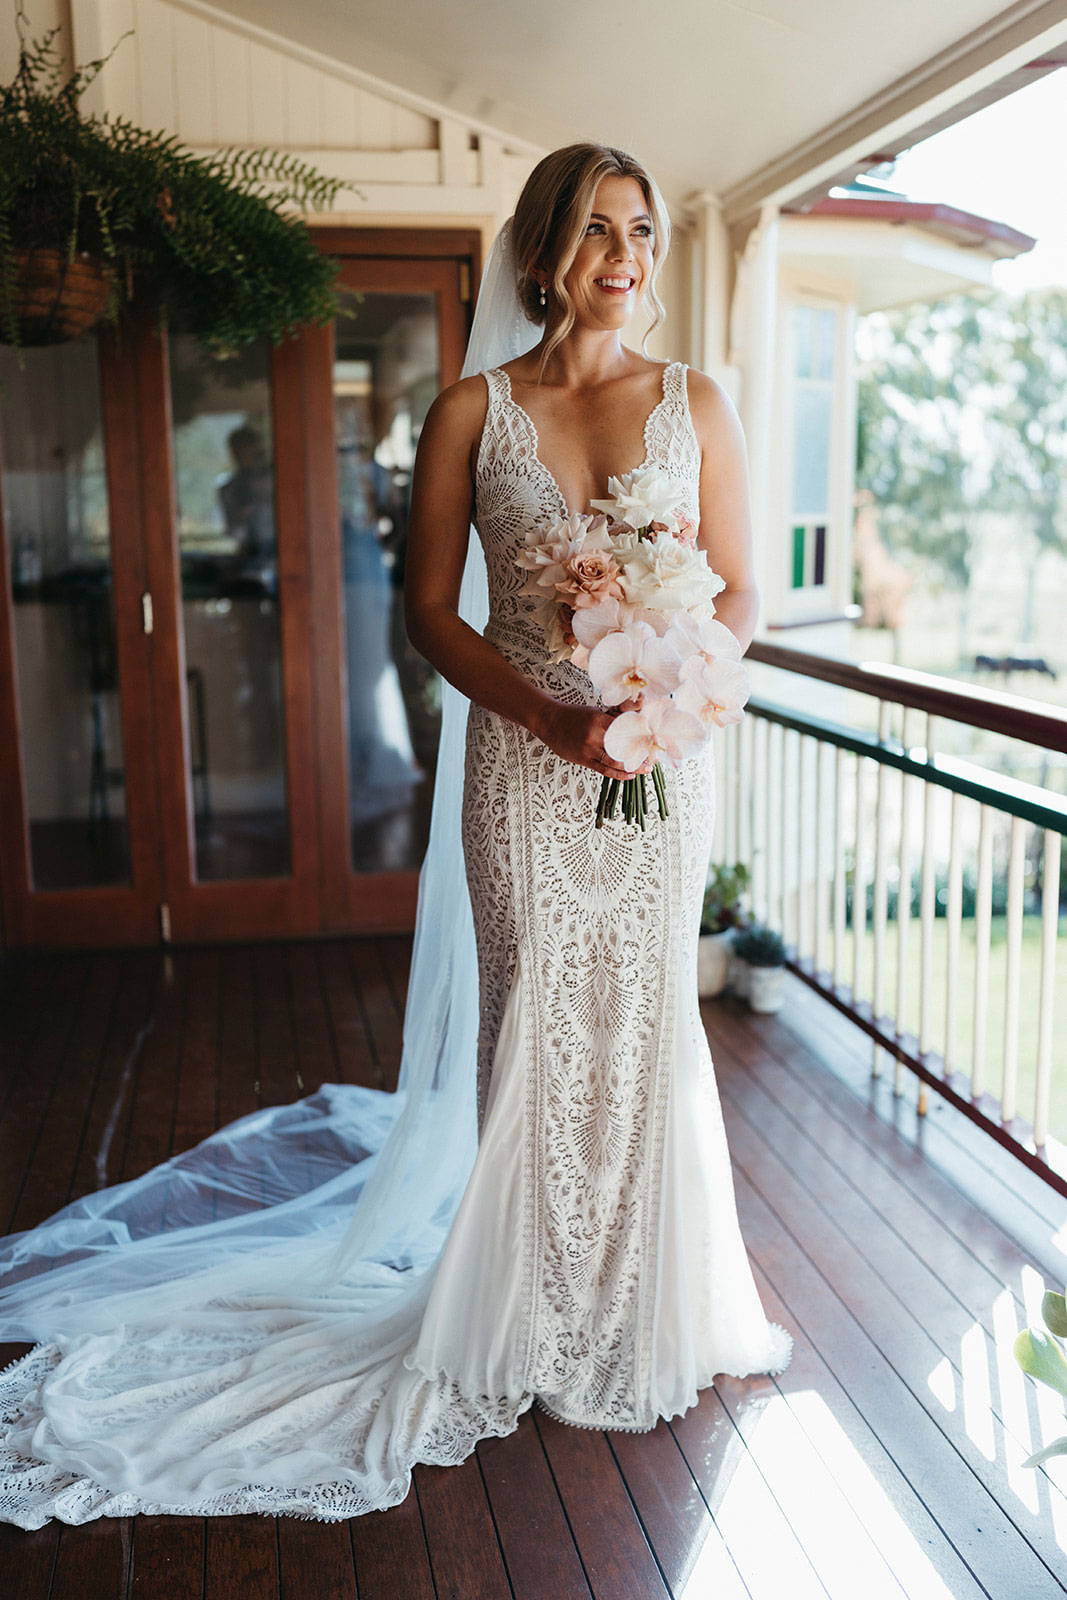 Bride in wedding dress with bouquet